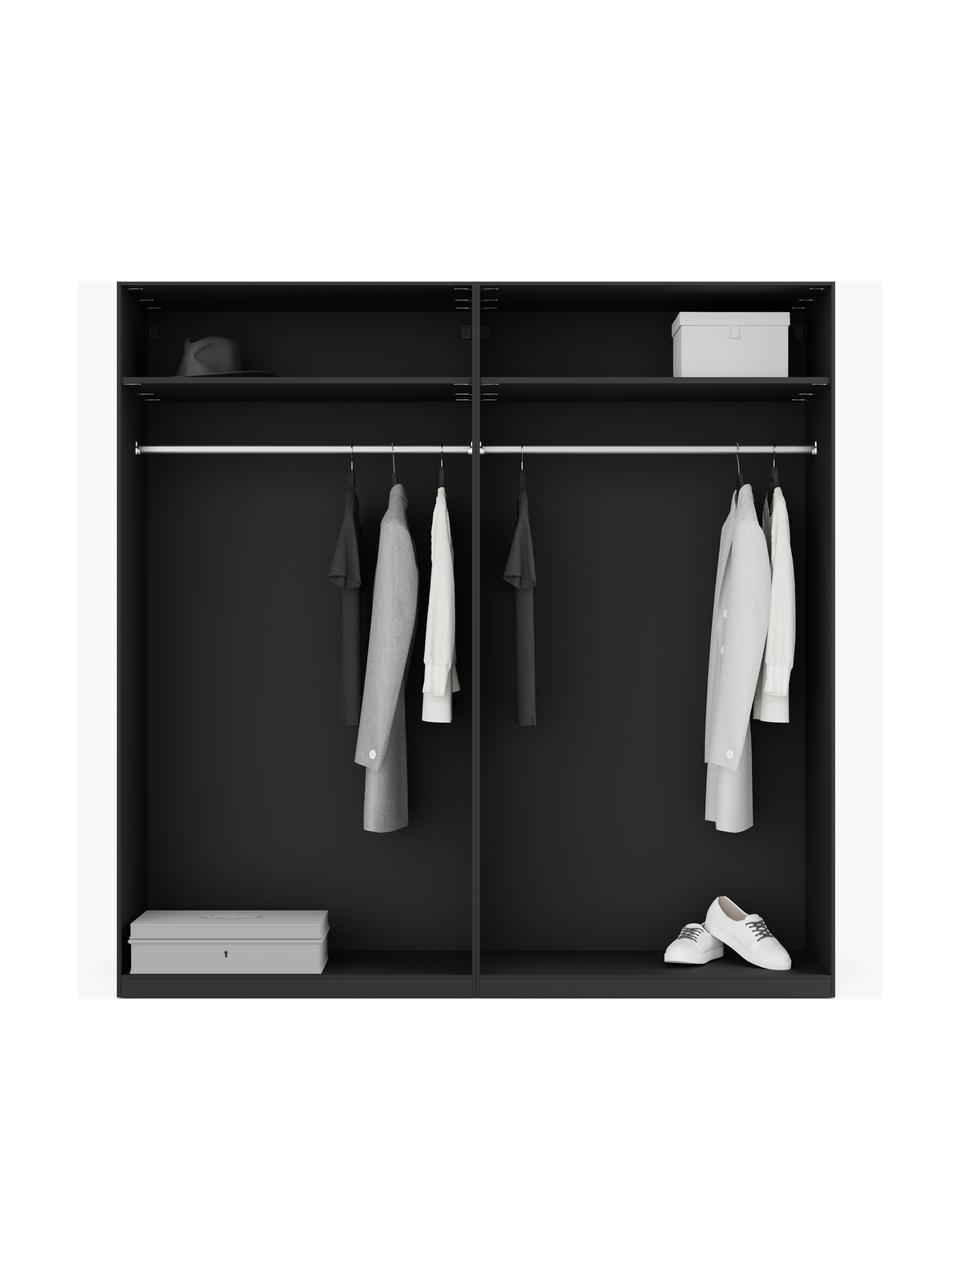 Modulární skříň s otočnými dveřmi Leon, šířka 200 cm, více variant, Černá, Interiér Basic, Š 200 x V 200 cm